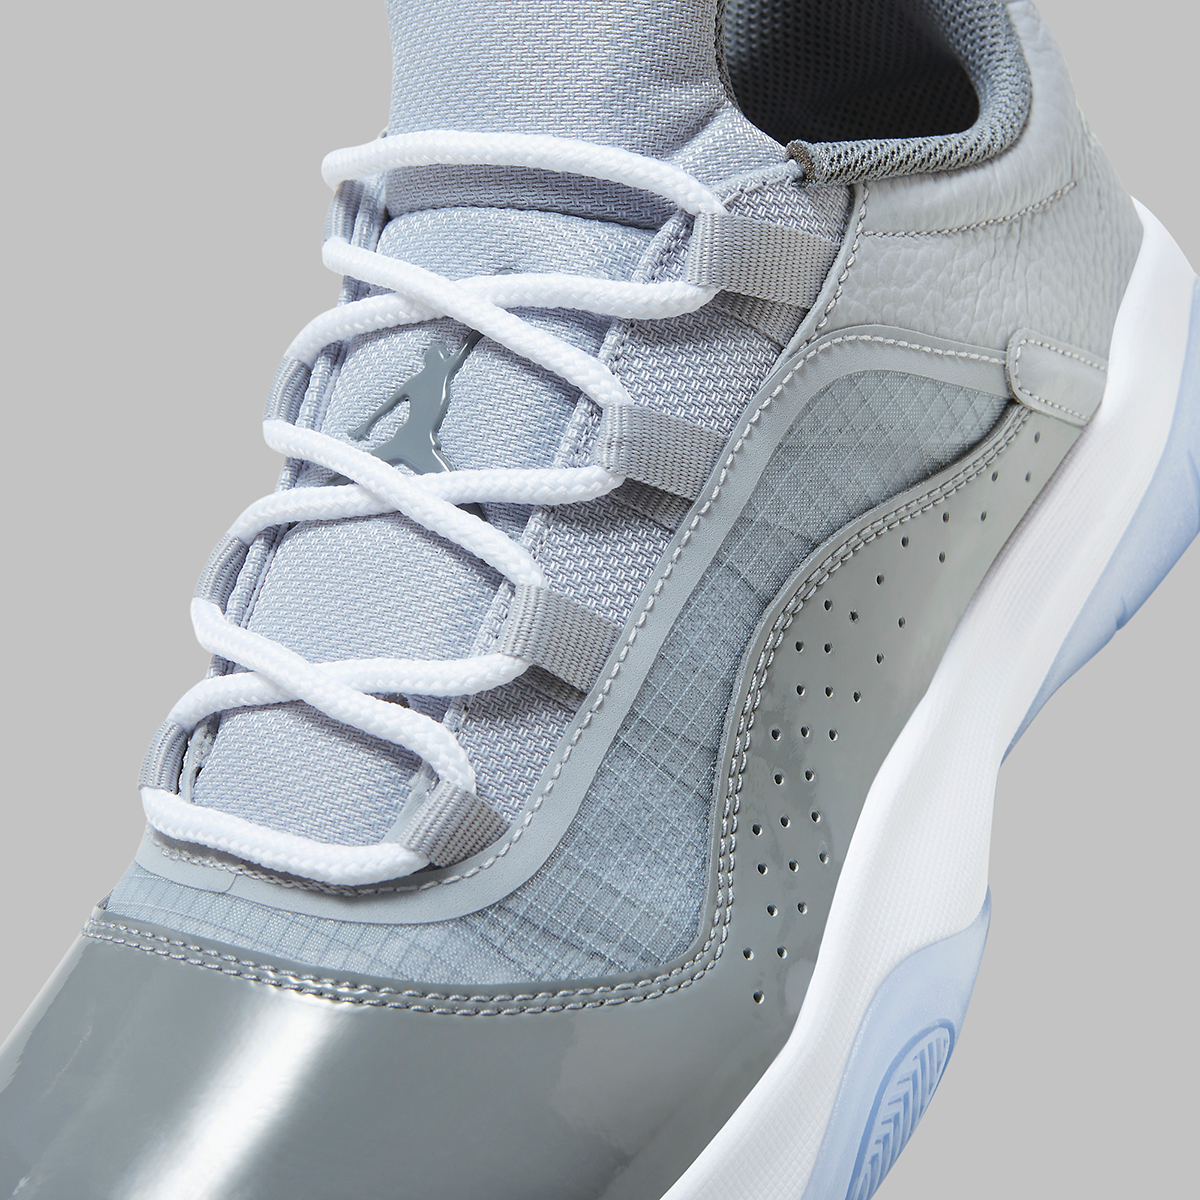 Nike look jordan кросівки найк джордан лакова шкіра 36-40 Cmft Low Cool Grey Dn4180 012 1